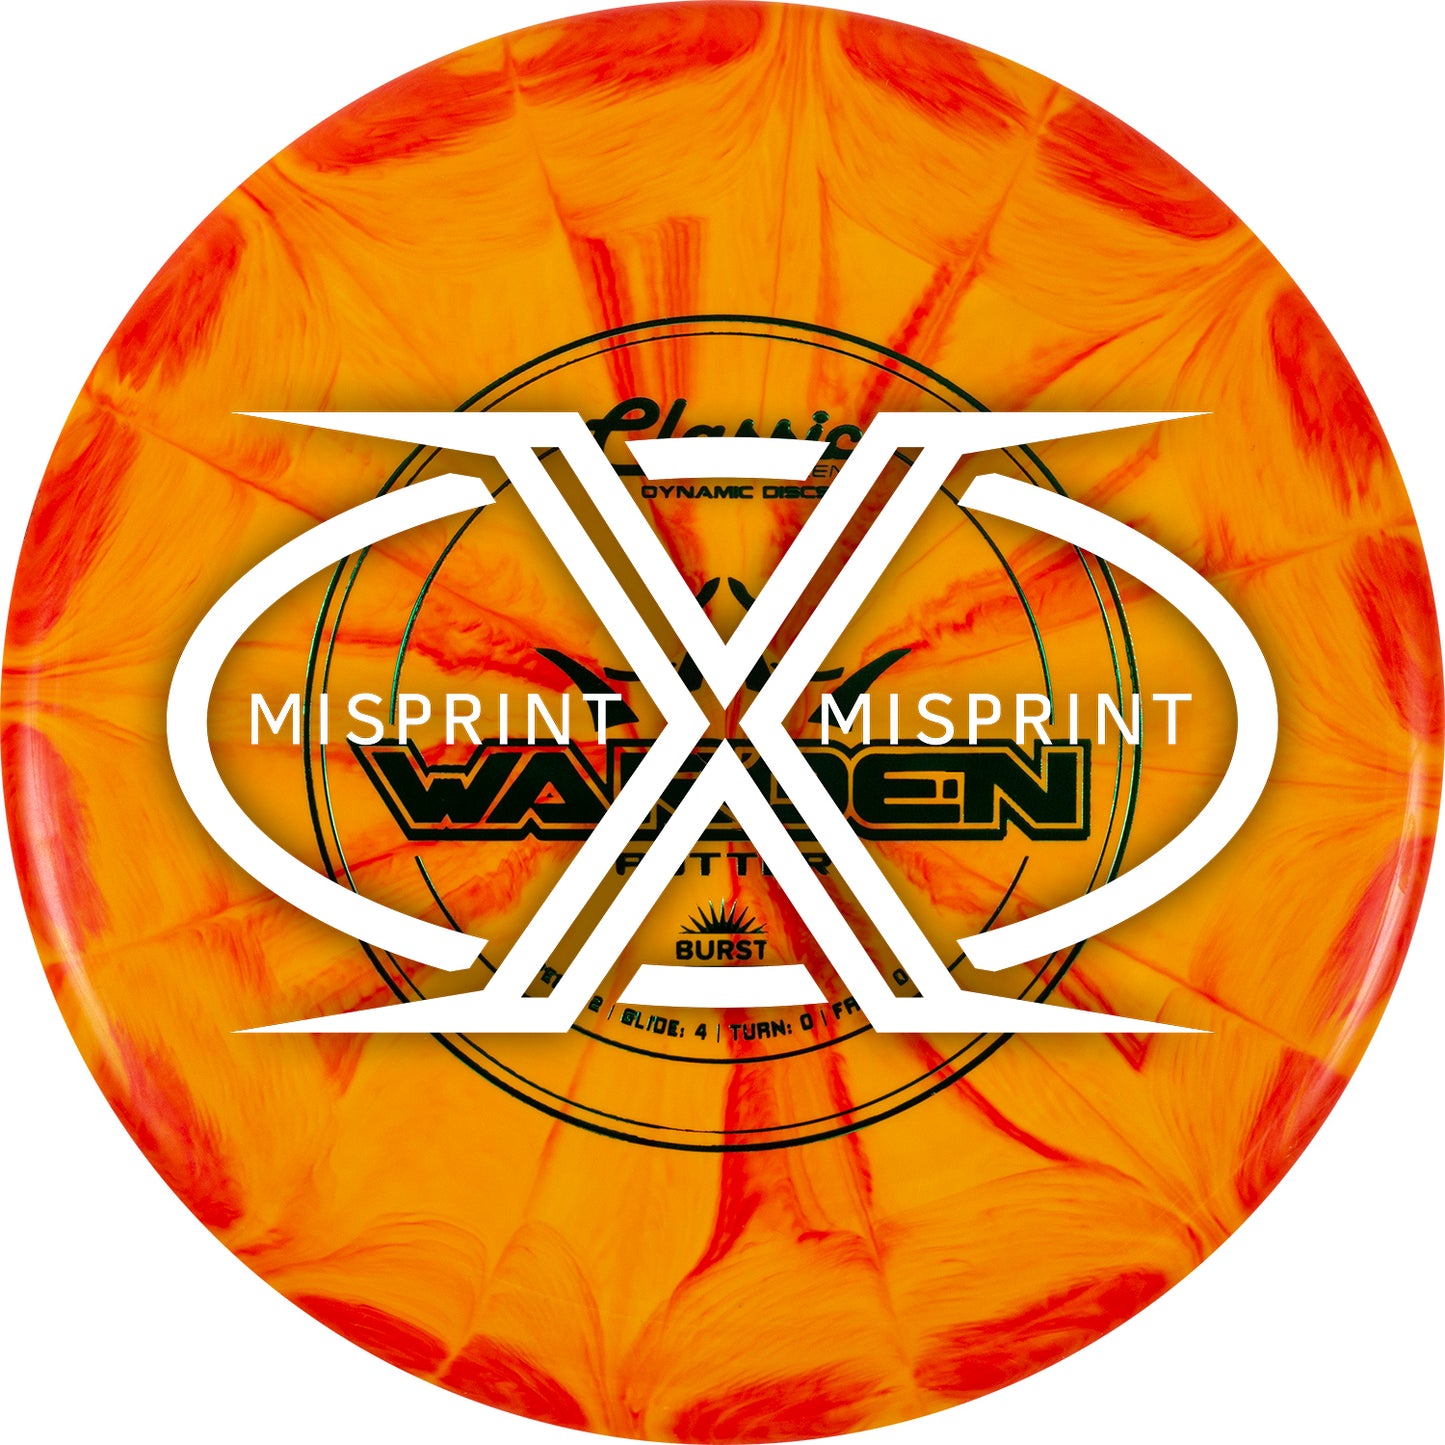 Misprint Dynamic Discs Classic Blend Burst Warden